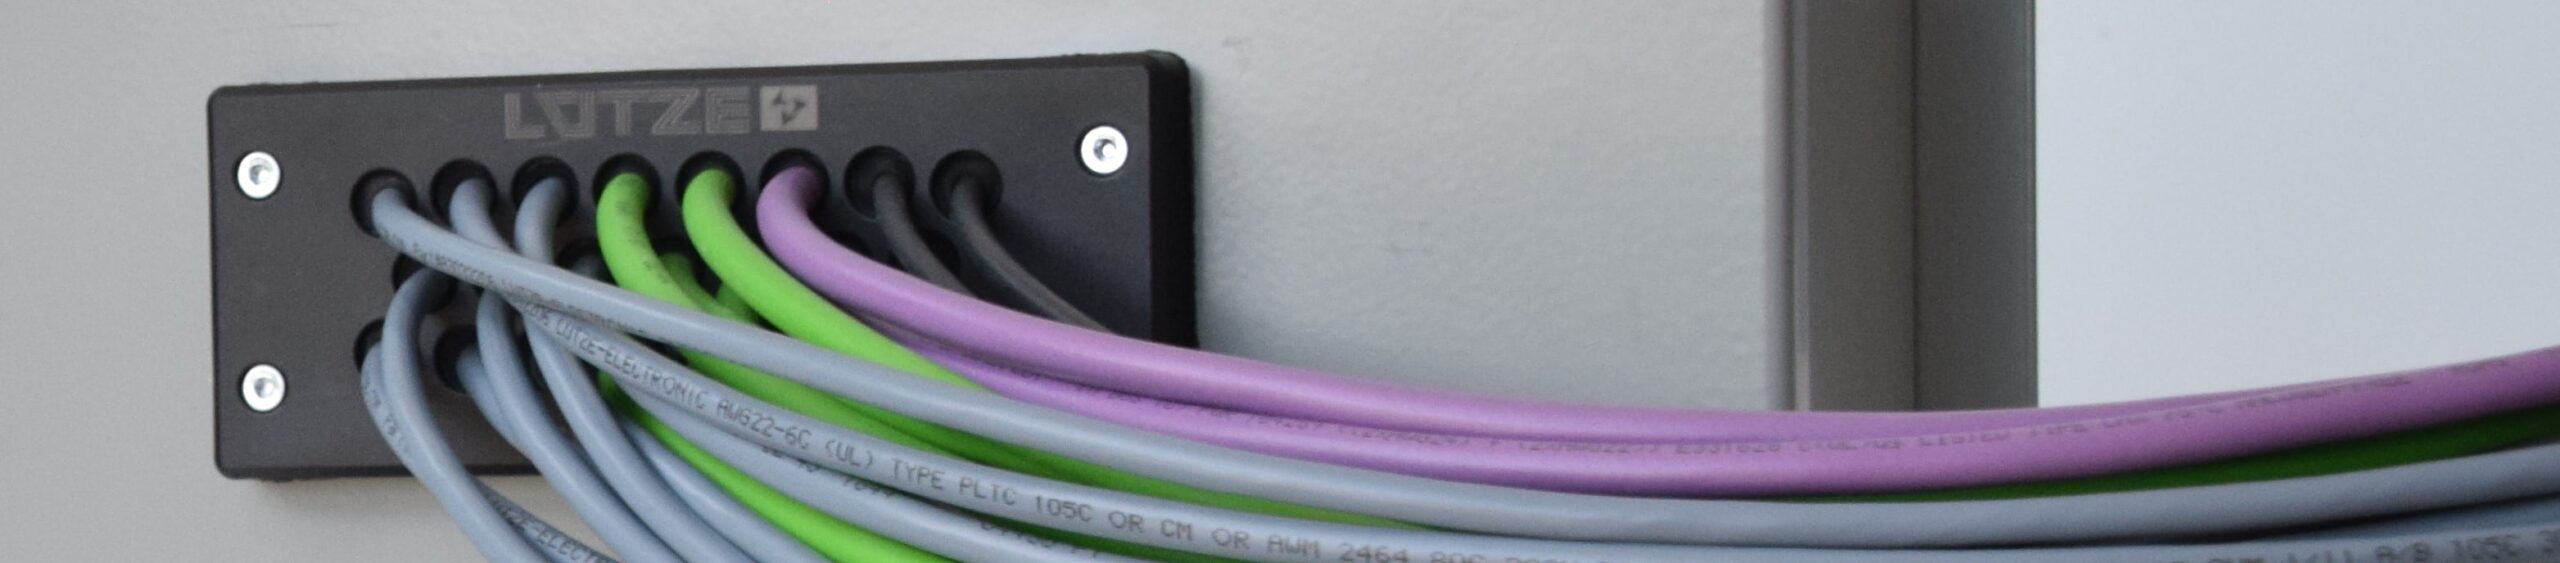 CABLEFIX X from LUTZE provides industrial enclosure cable management